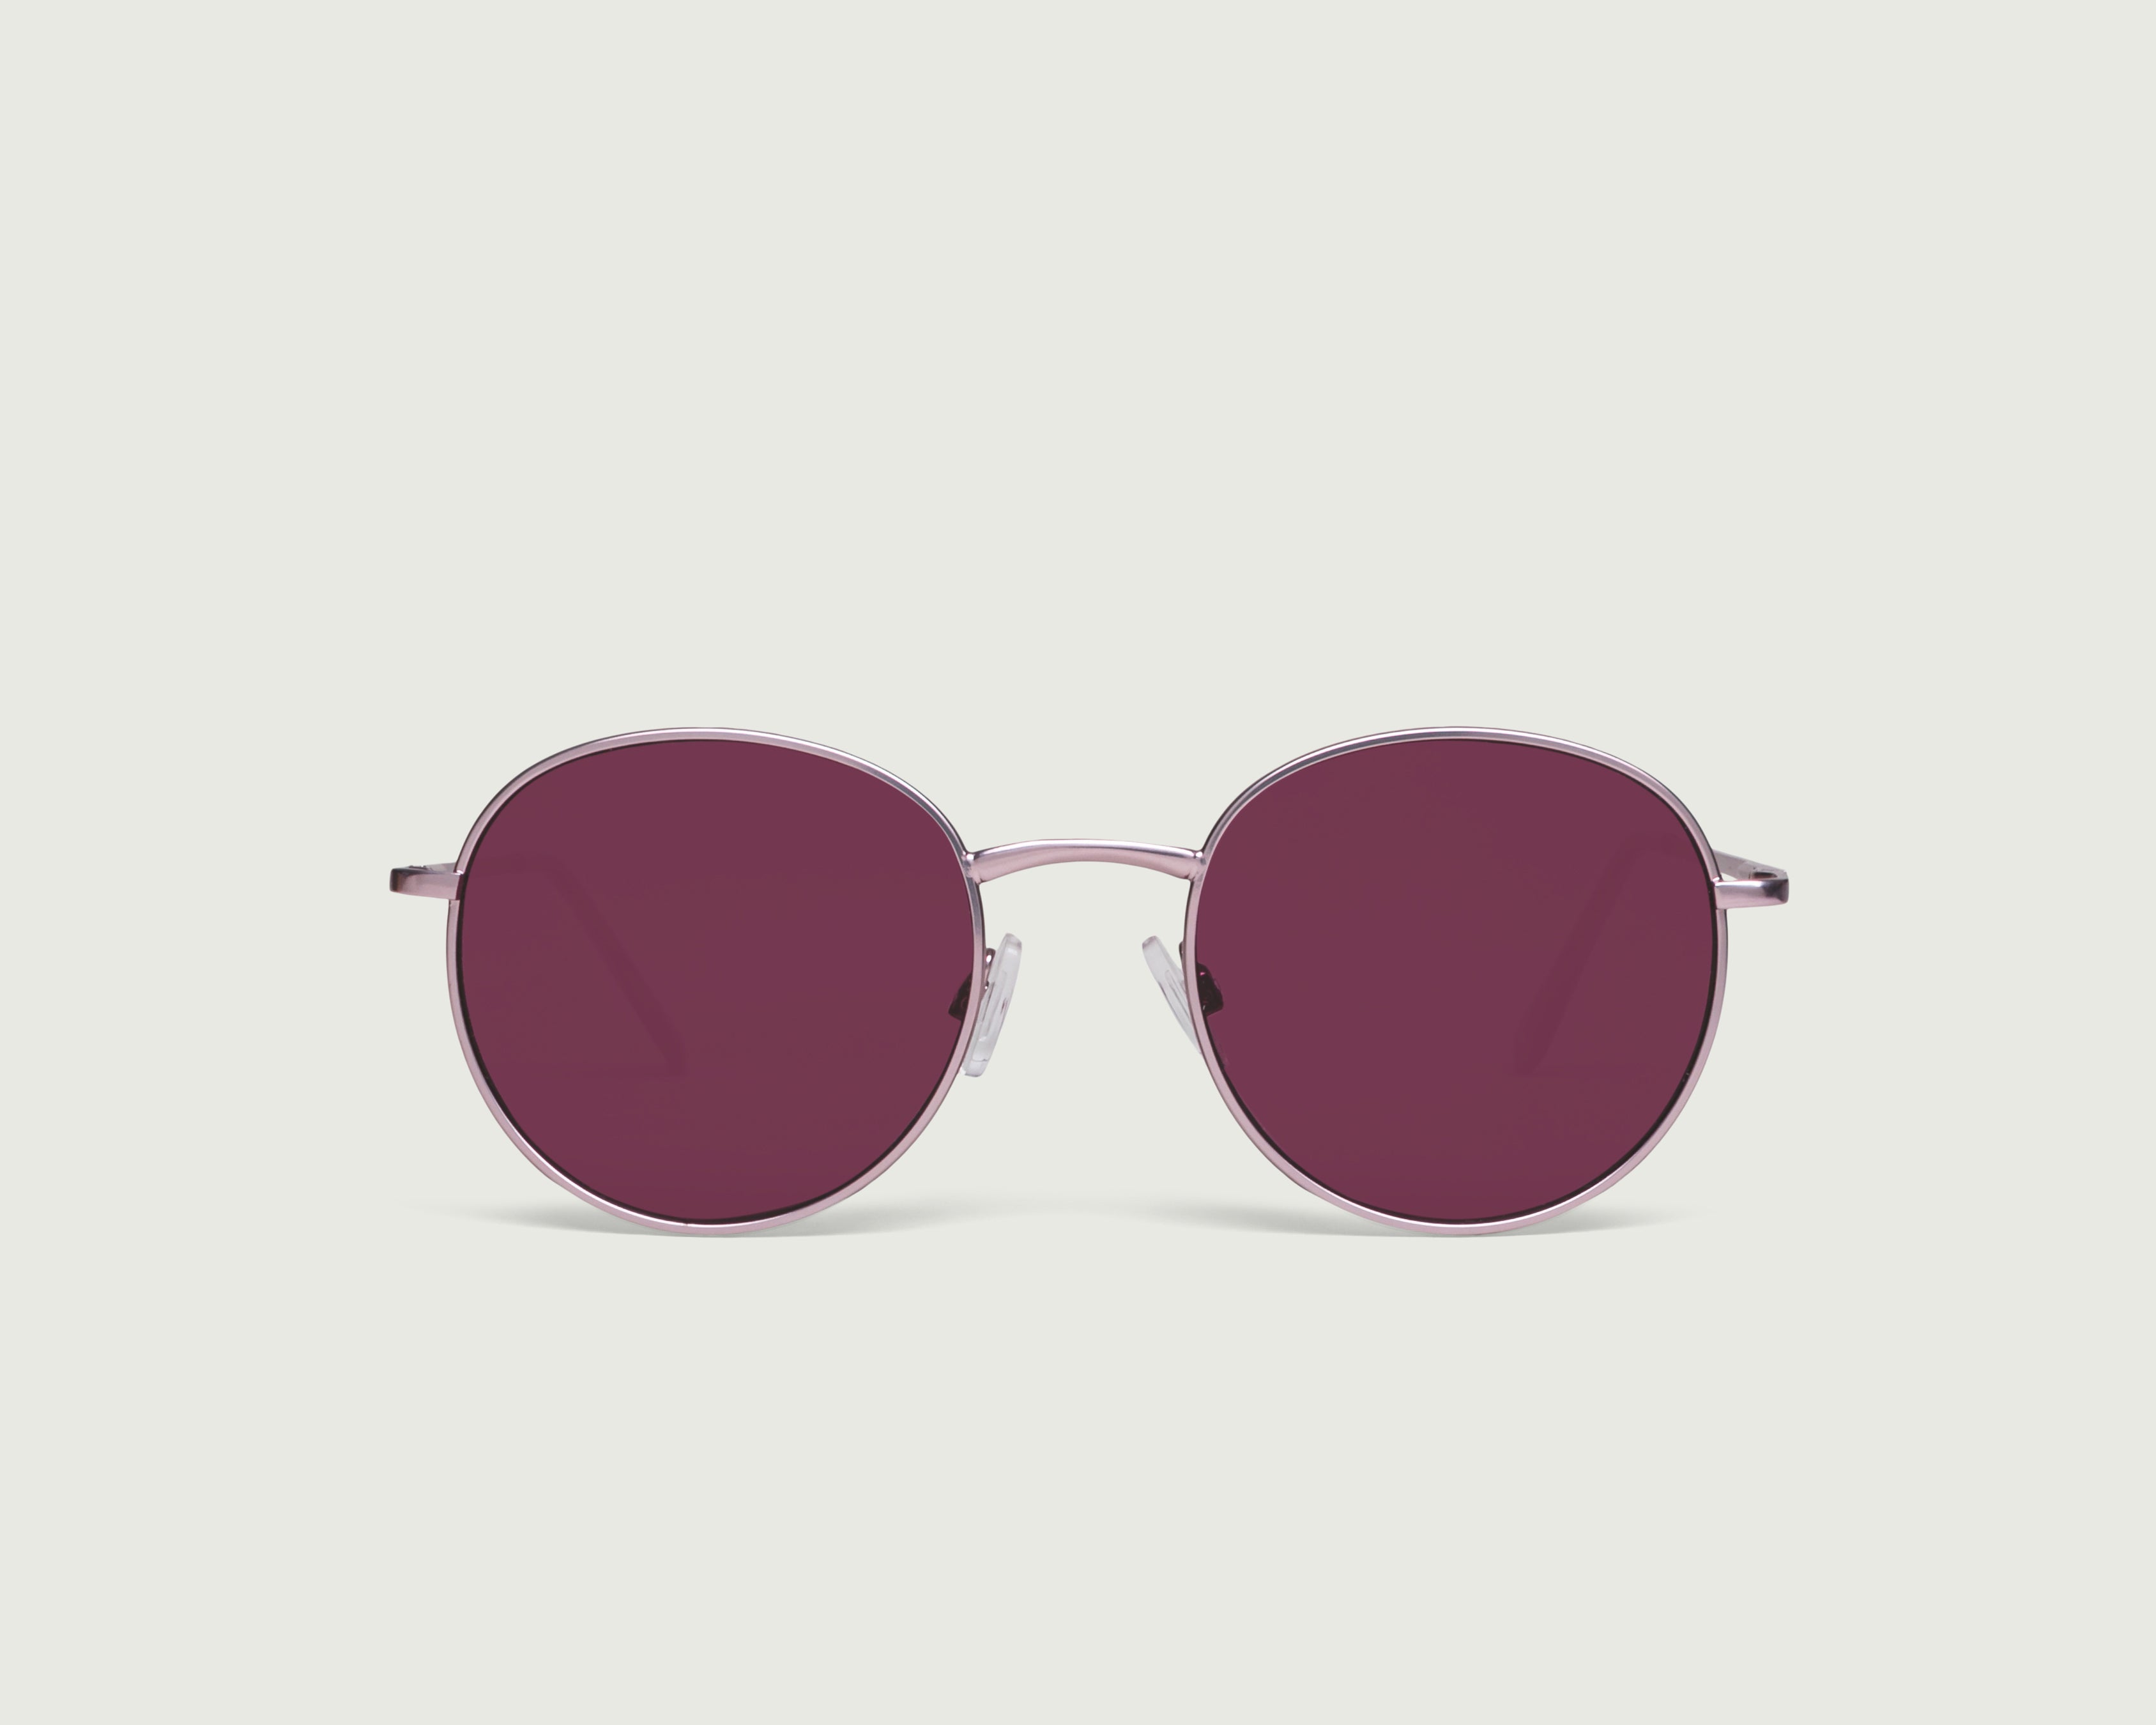 Plum::Jett Sunglasses round pink metal front (4687762260022)